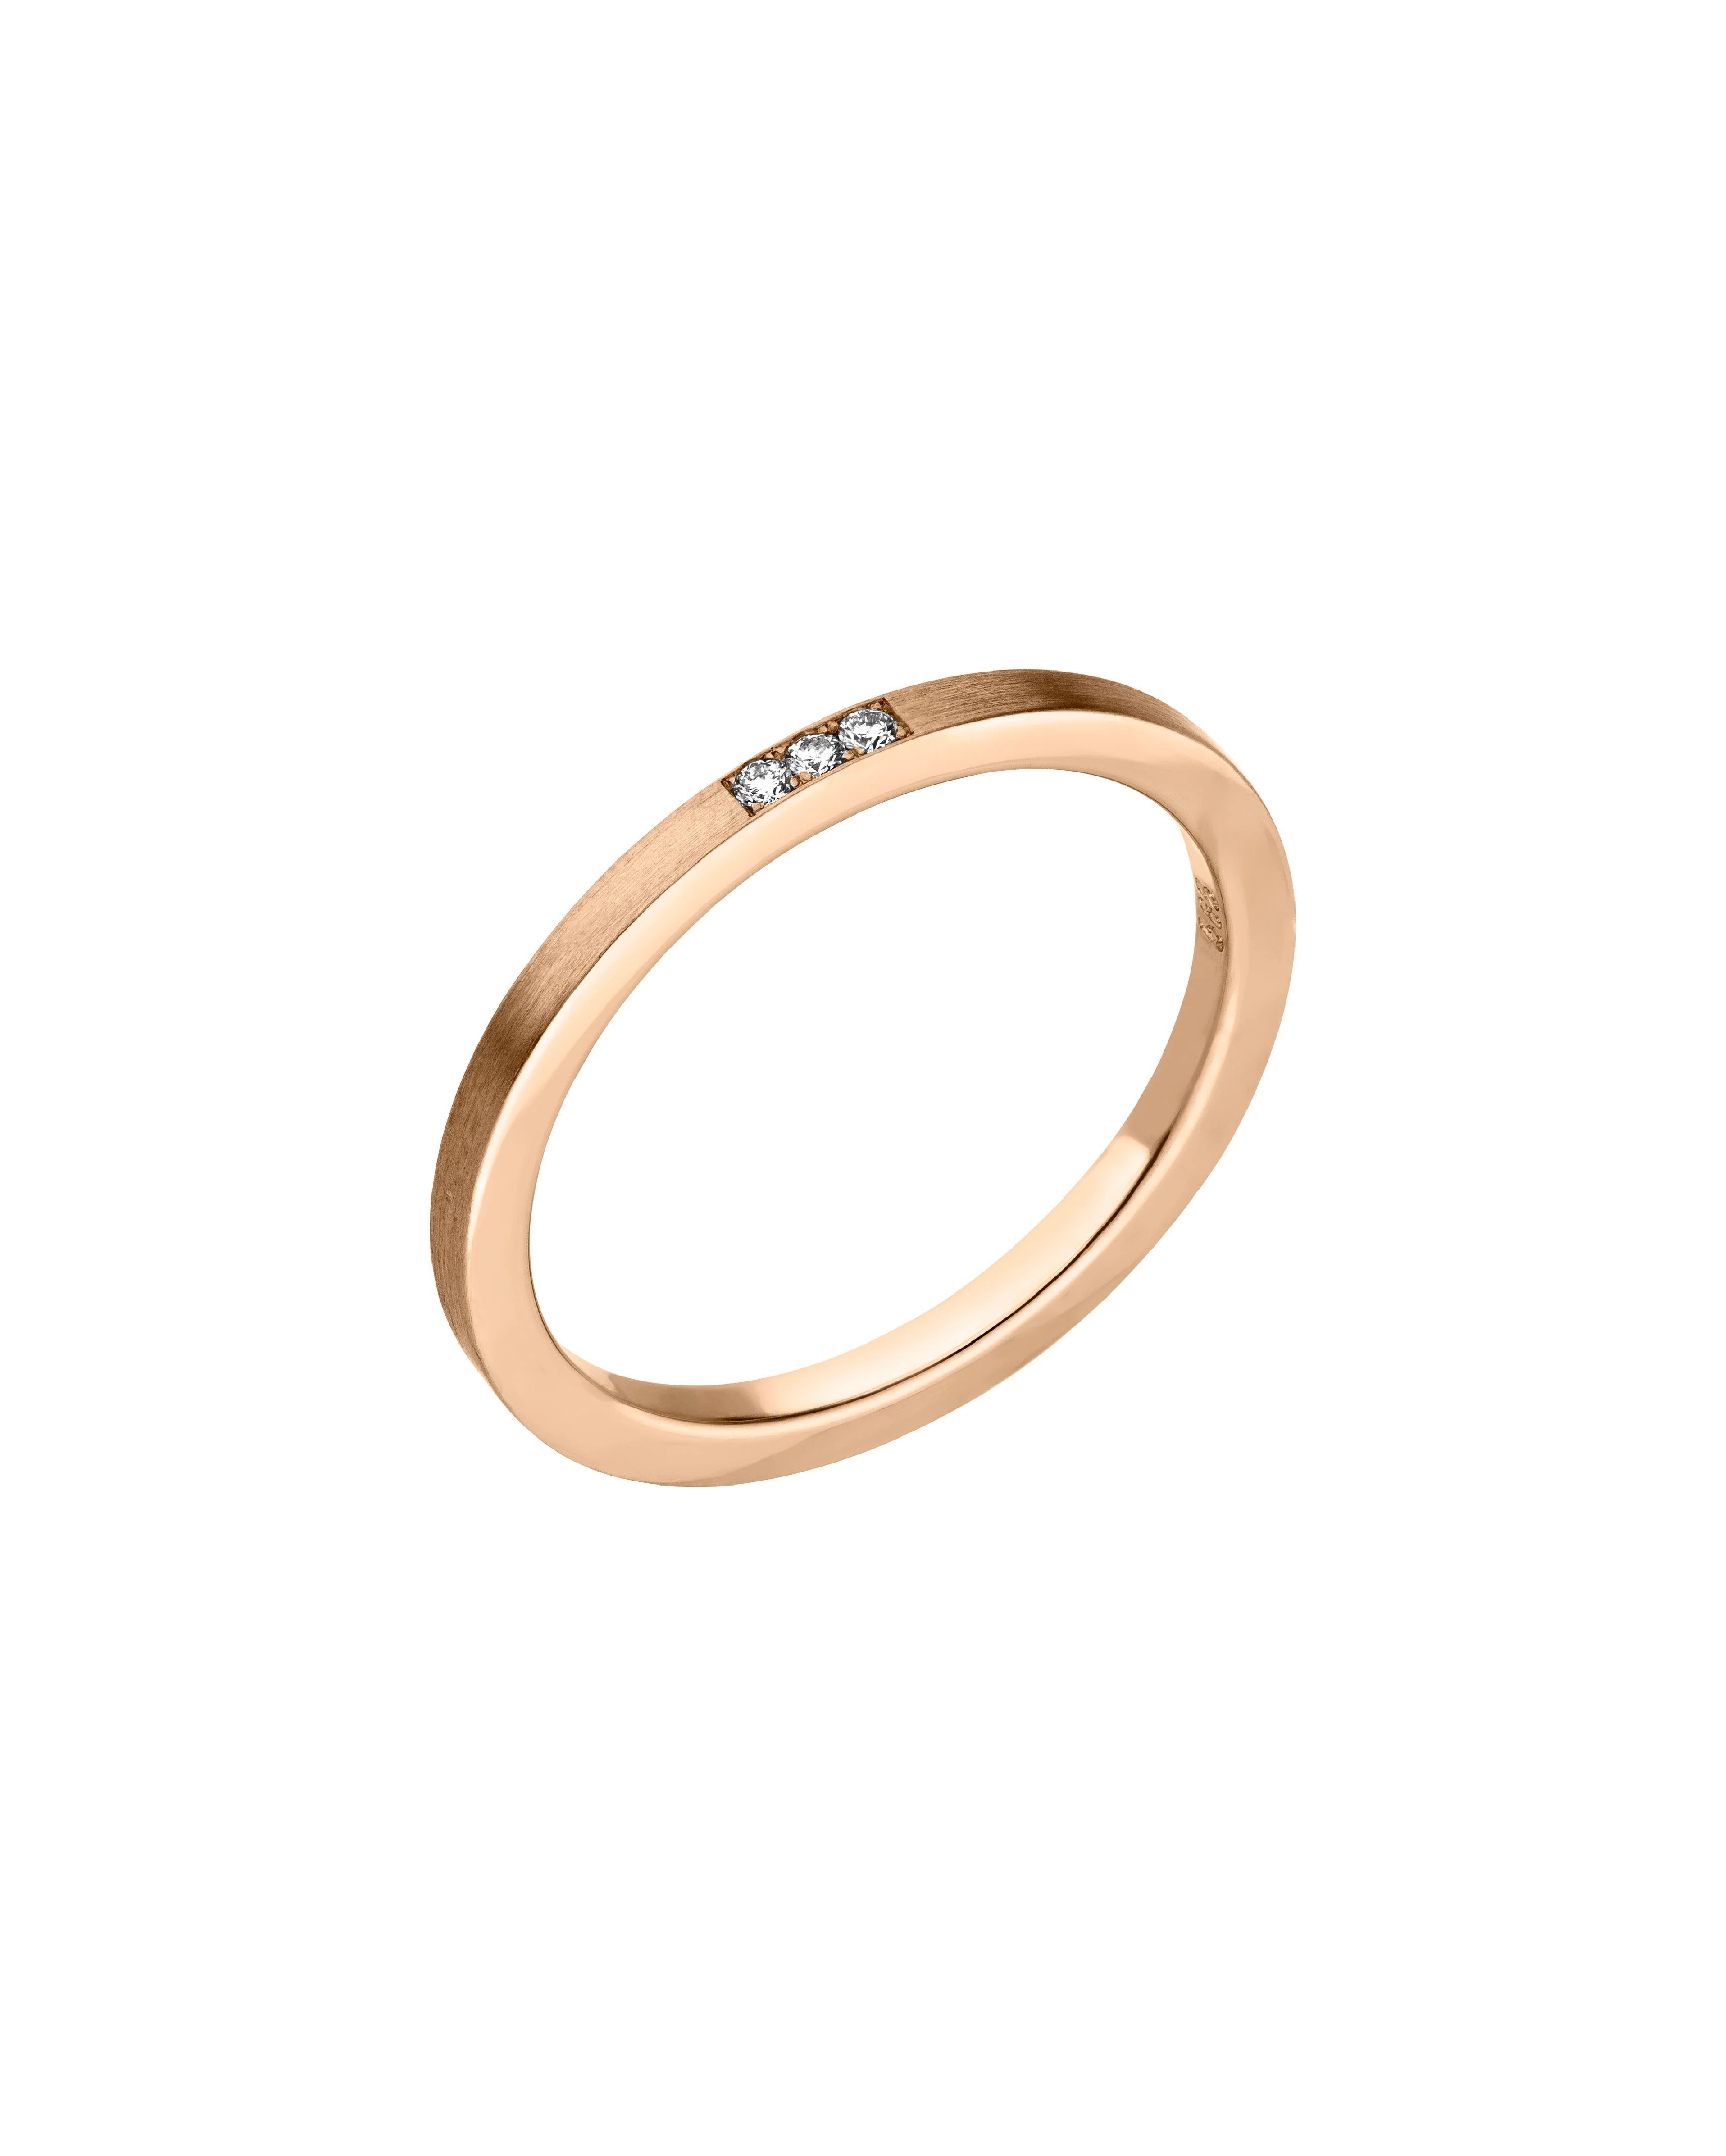 FINA SQUARE - Verlobungsring Rosegold - Ring Roségold 585